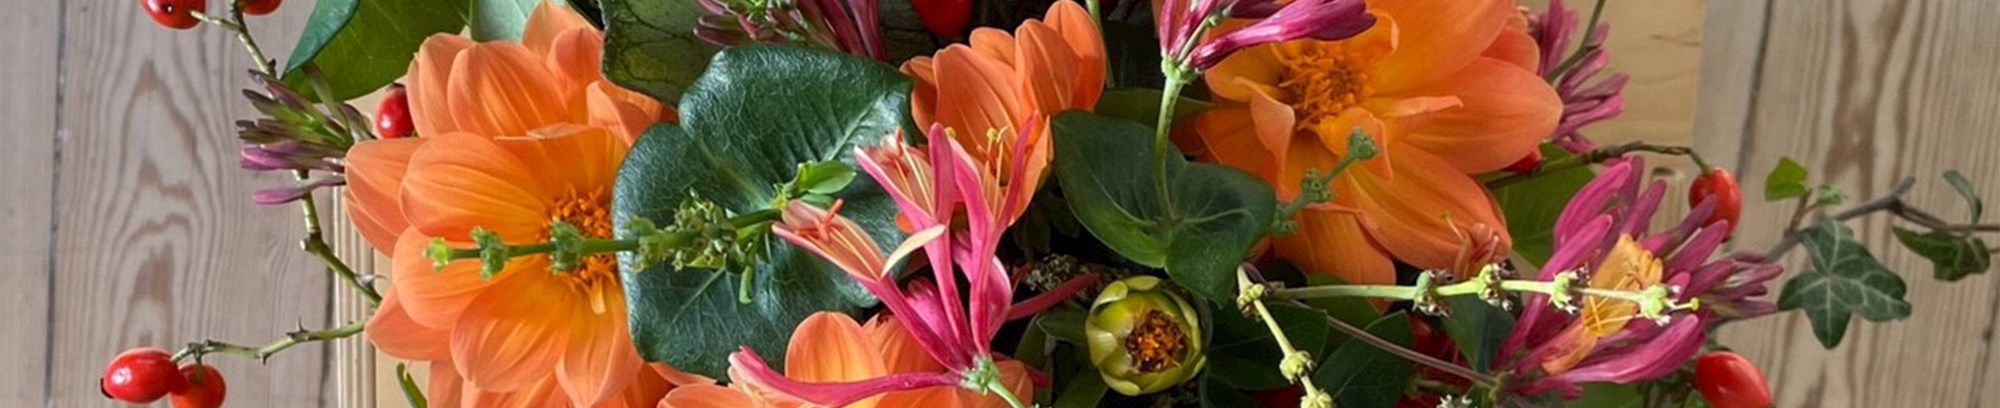 blomster dekoration orange - Jannie Kløve kurser hos FOF i Randers i blomsterbinding